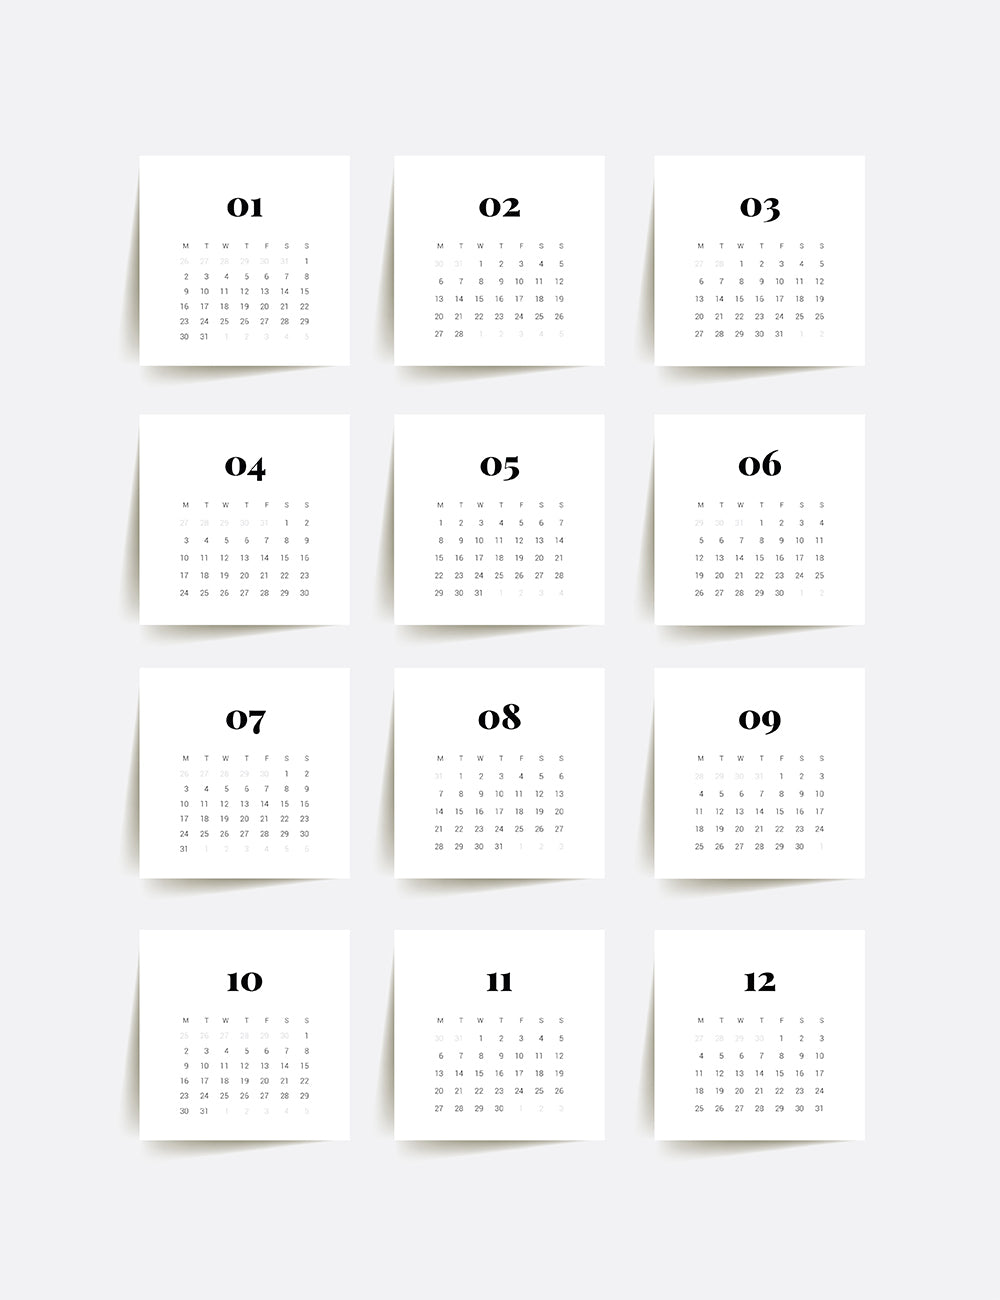 2023 Calendar | 3x3 | 2x2 | Printable Mini Calendar 2023 | Planner Cards | Minimal Aesthetic | Clean Design |  PAPER MOON Art & Design